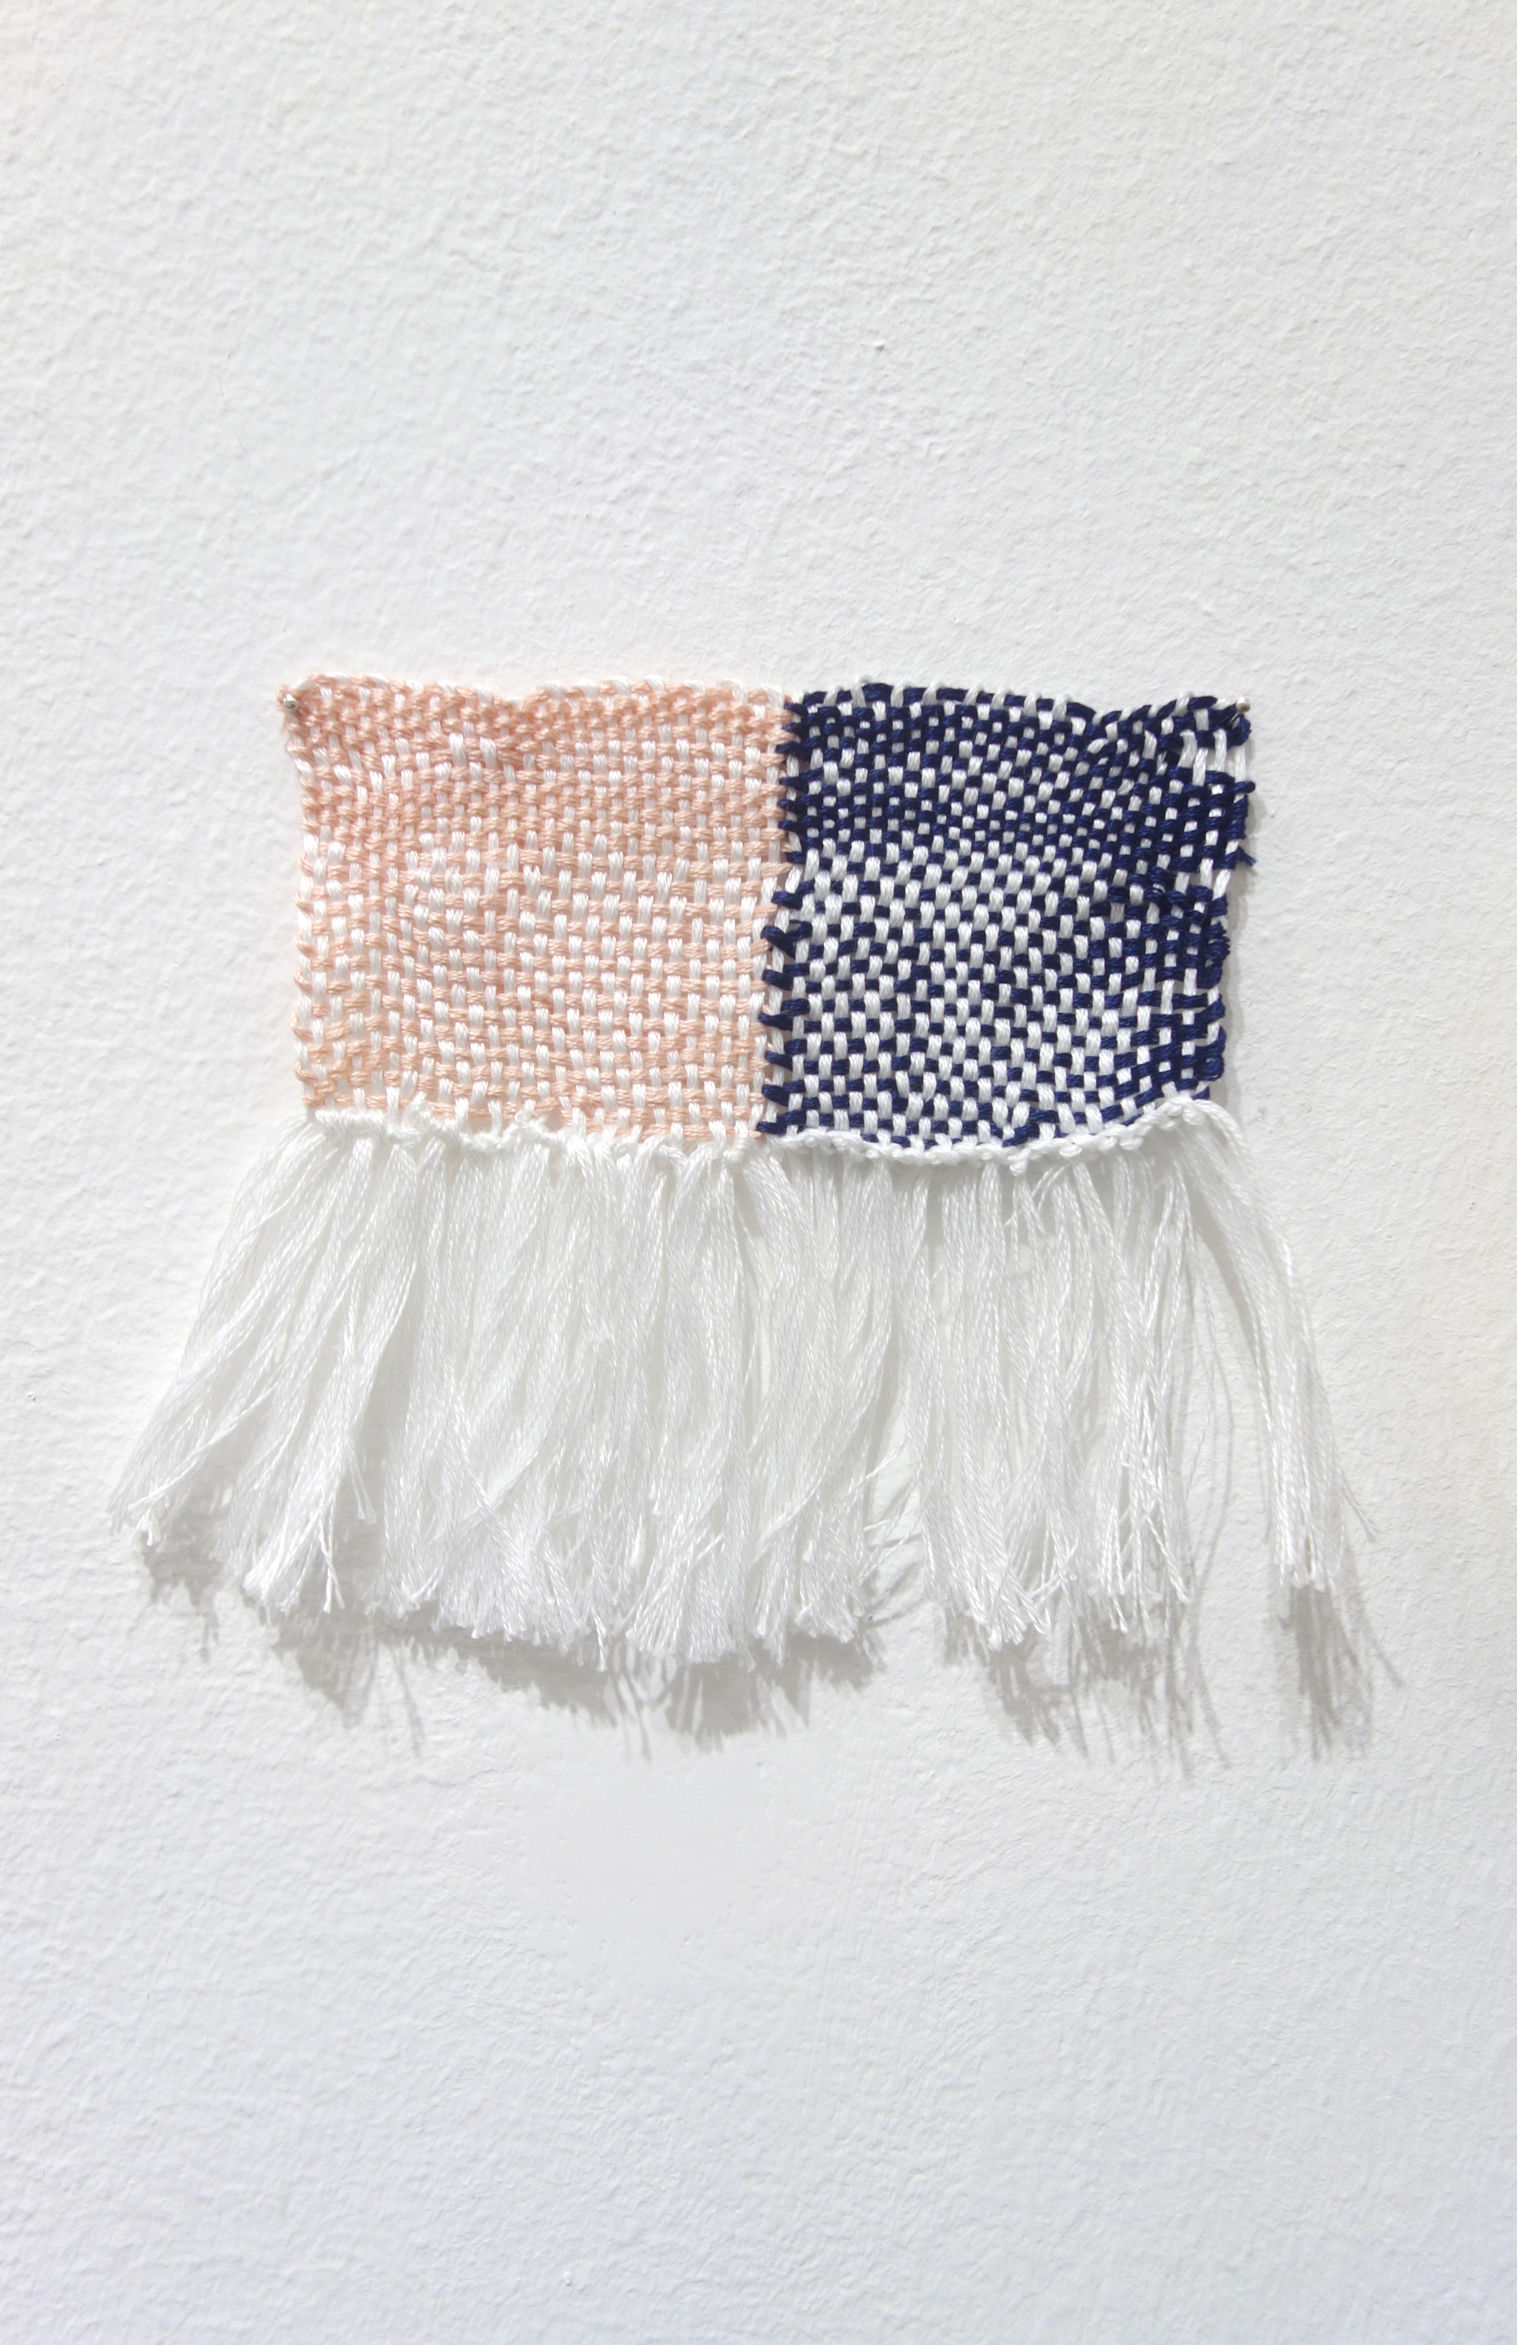 Izziyana Suhaimi, Small Studies of an Everyday Practice III, 2014, Cotton thread; woven, H11 x W10 cm.jpg